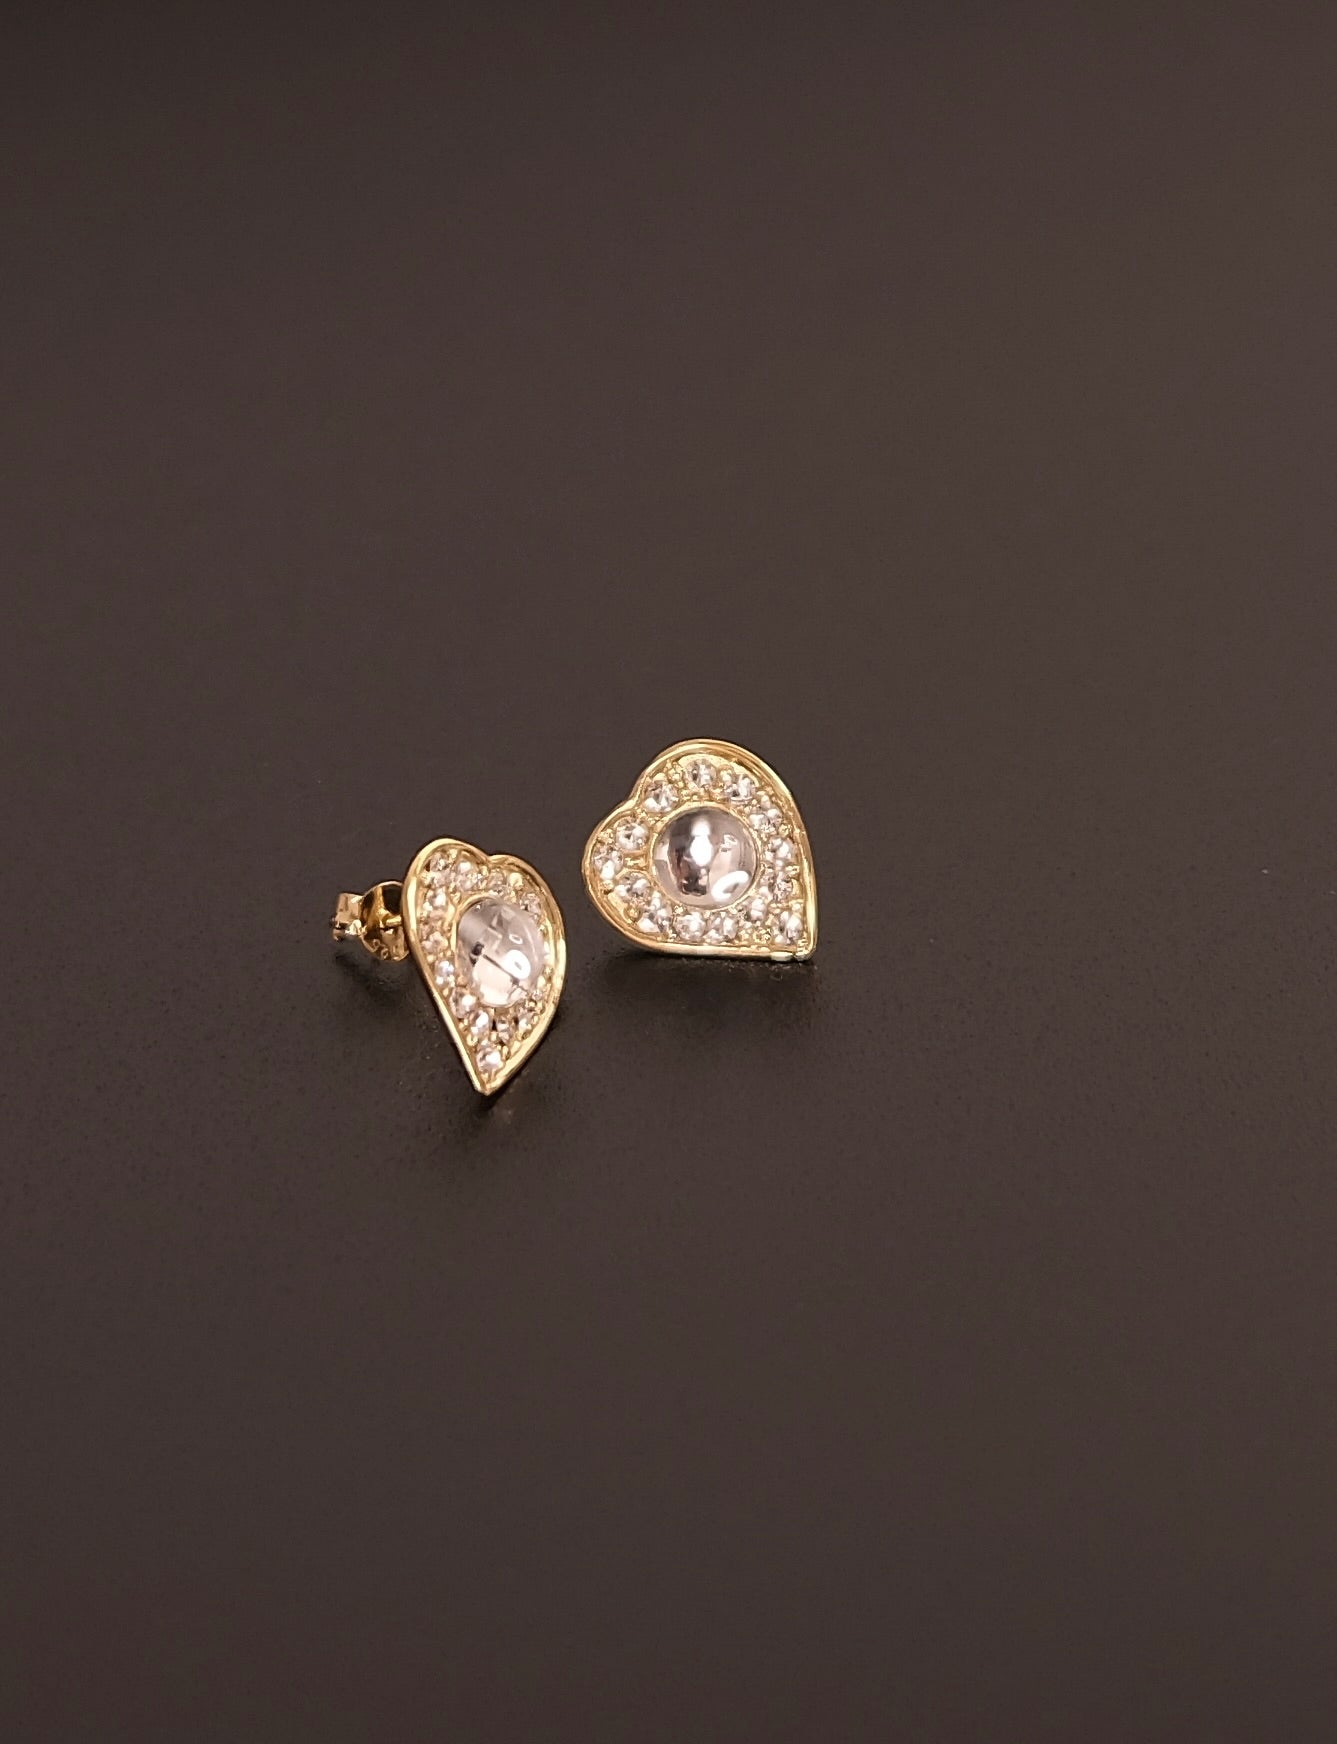 New Heart Gold Stud Earrings Cabochon Sterling Silver 925 Base 2Mc 24K Gorgeous Swarovski Crystal